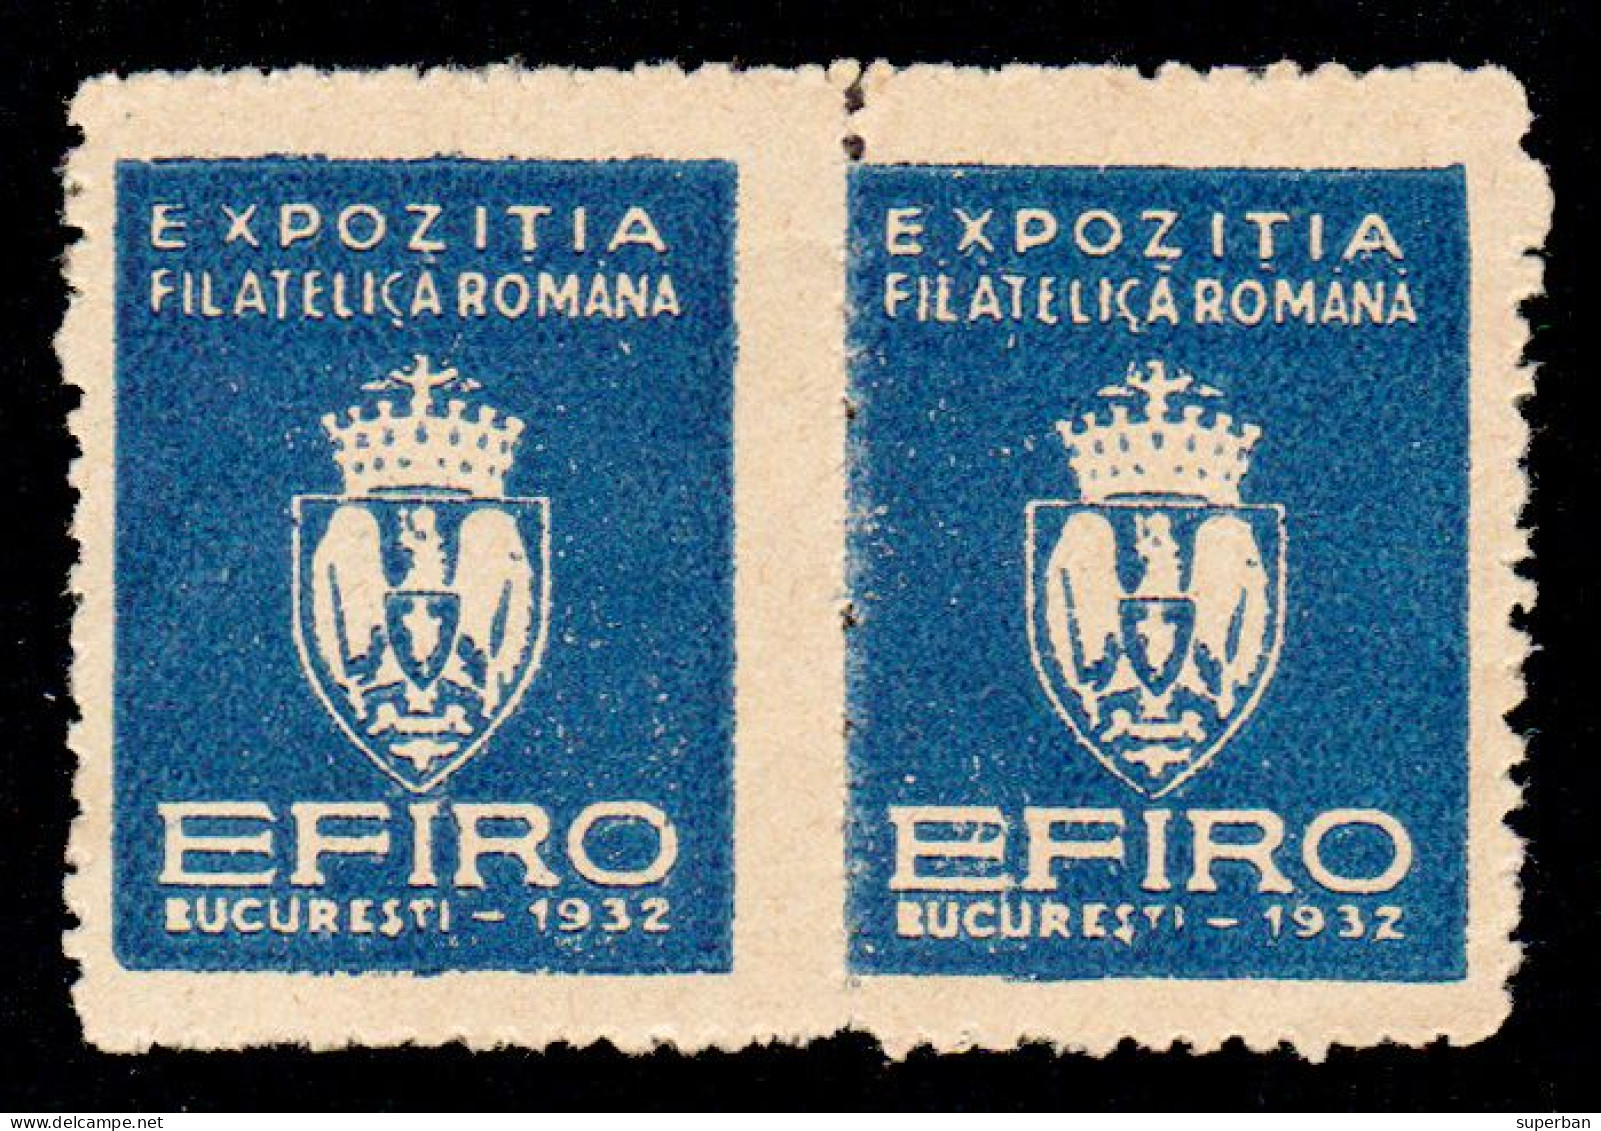 ROUMANIE / ROMANIA - VIGNETTE / CINDERELLA - 2 X EFIRO 1932 - EXPOZITIA FILATELICA ROMÂNA [ MNH ] - RRR ! (am819) - Revenue Stamps